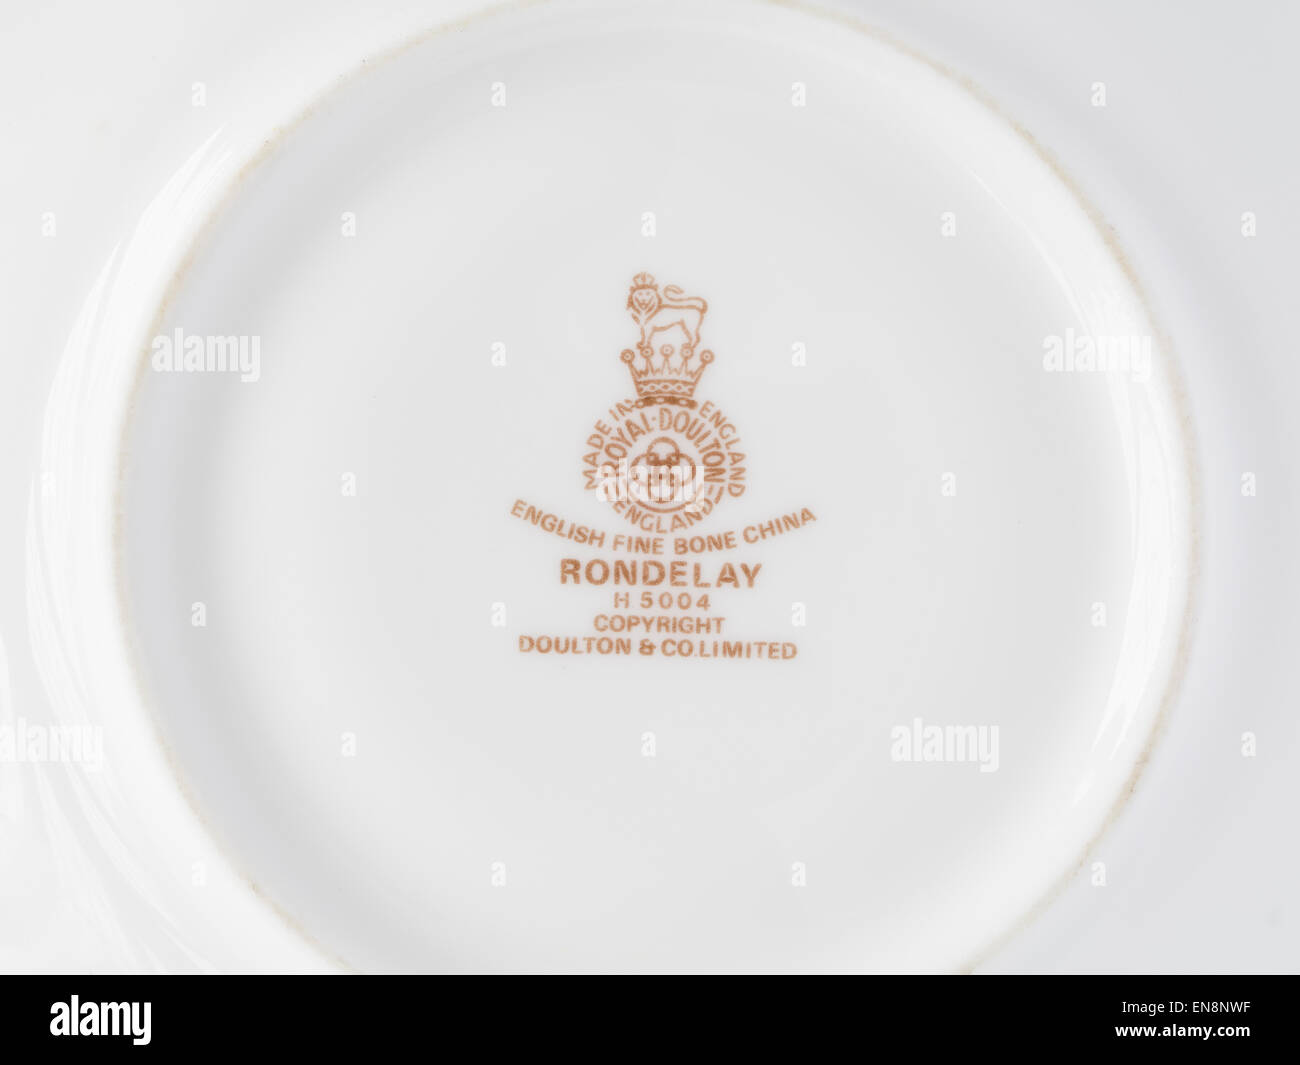 Rondelay by Royal Doulton Fine Bone China, Ceramics / Pottery Made in England Stock Photo